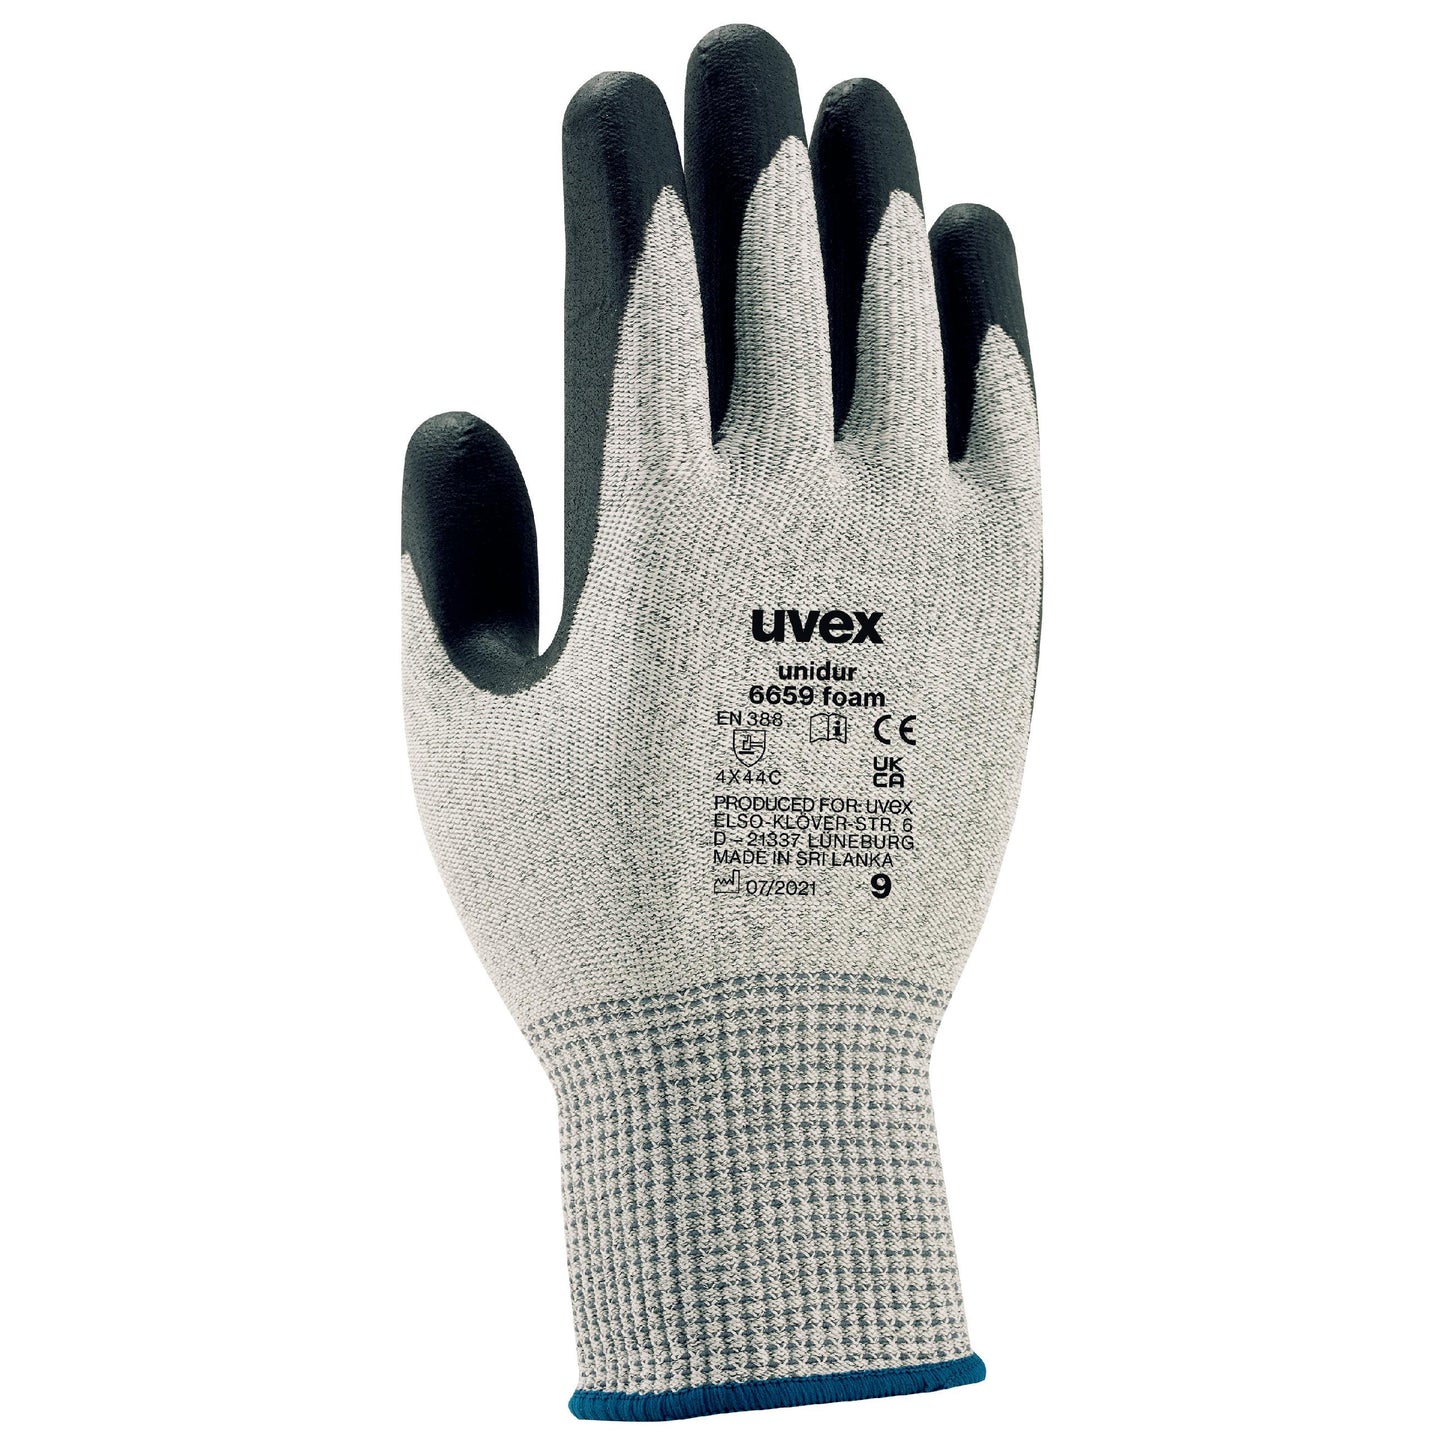 uvex unidur 6659 foam Cut Protection Gloves Cut C Rated